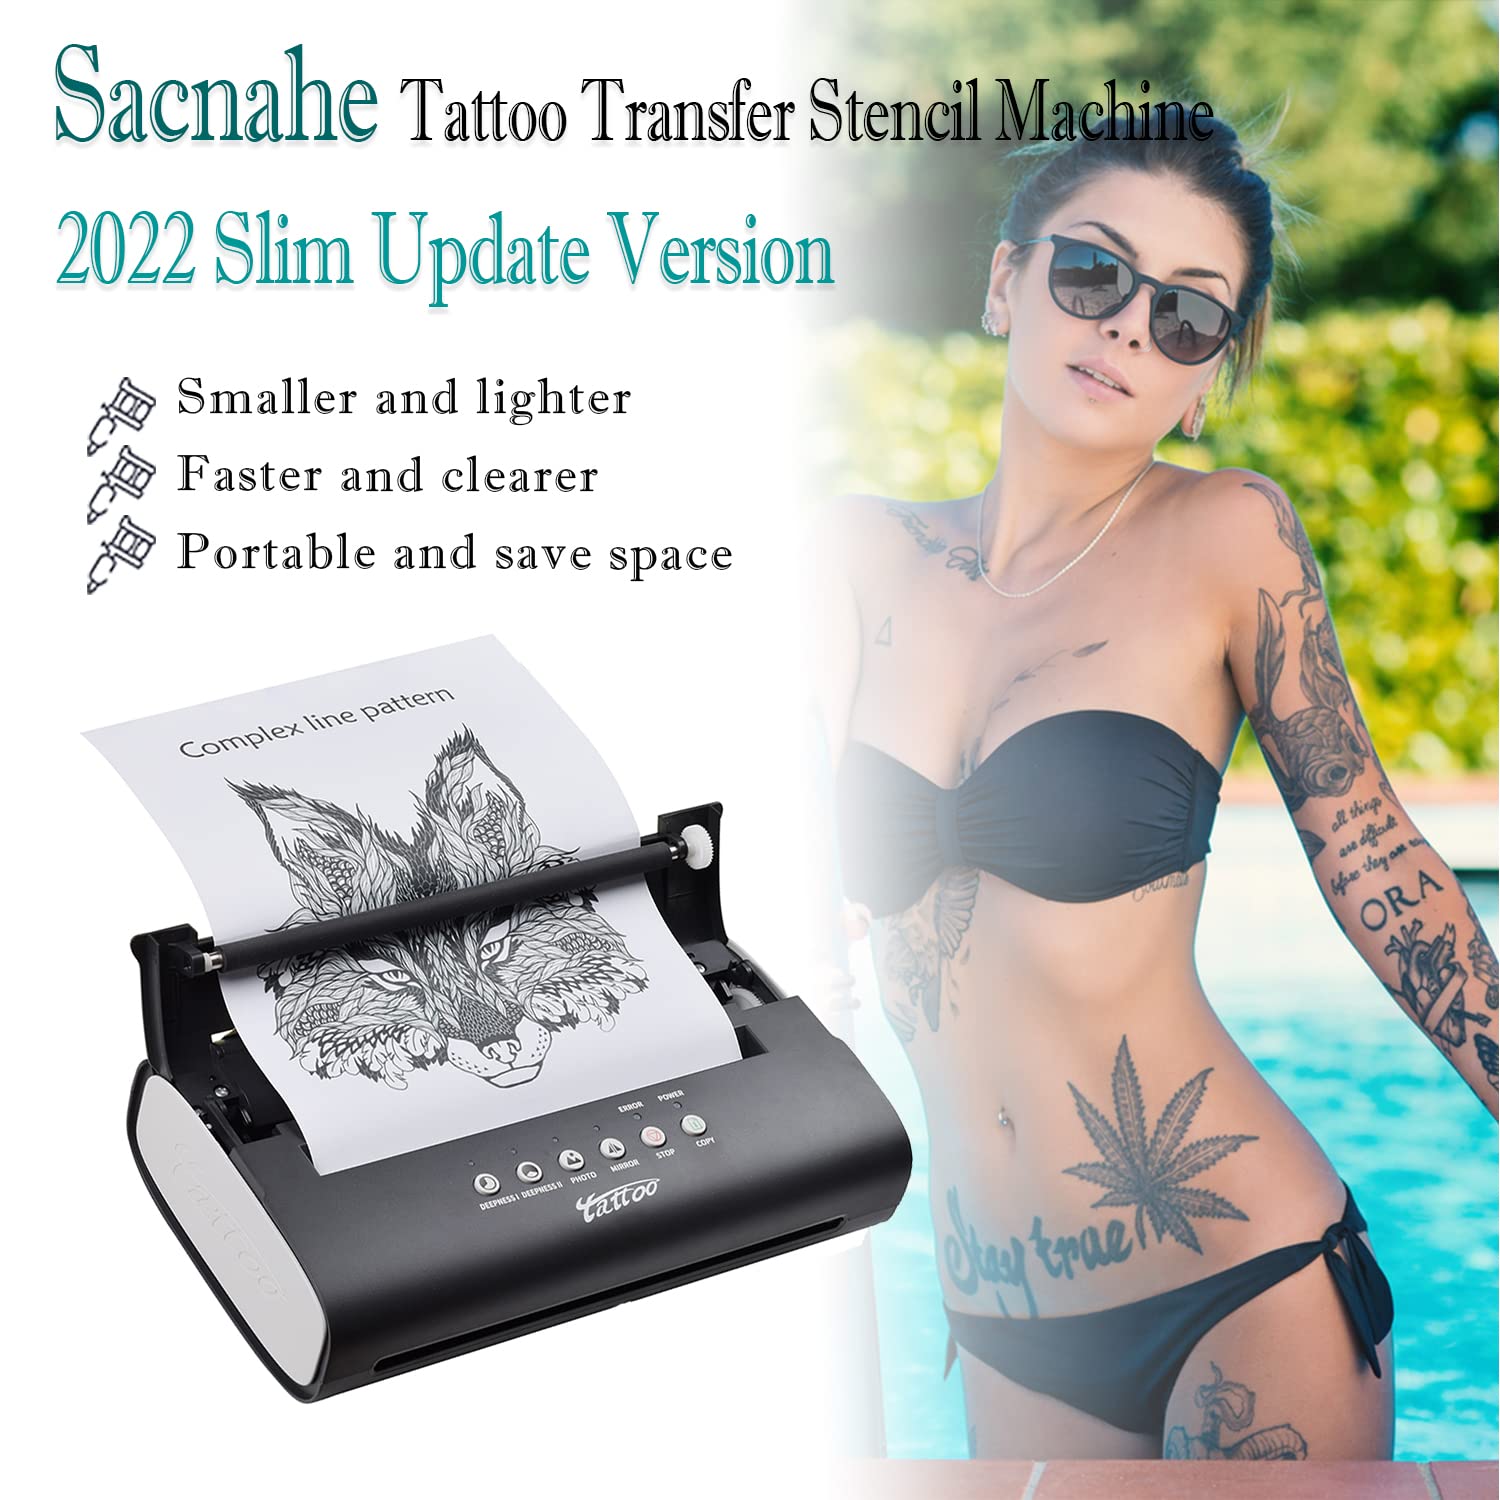 Sacnahe Tattoo Transfer Stencil Machine Copier Printer with 20pcs Free Transfer Paper Thermal Tattoo Kit Copier Printer Black (New Update Version)